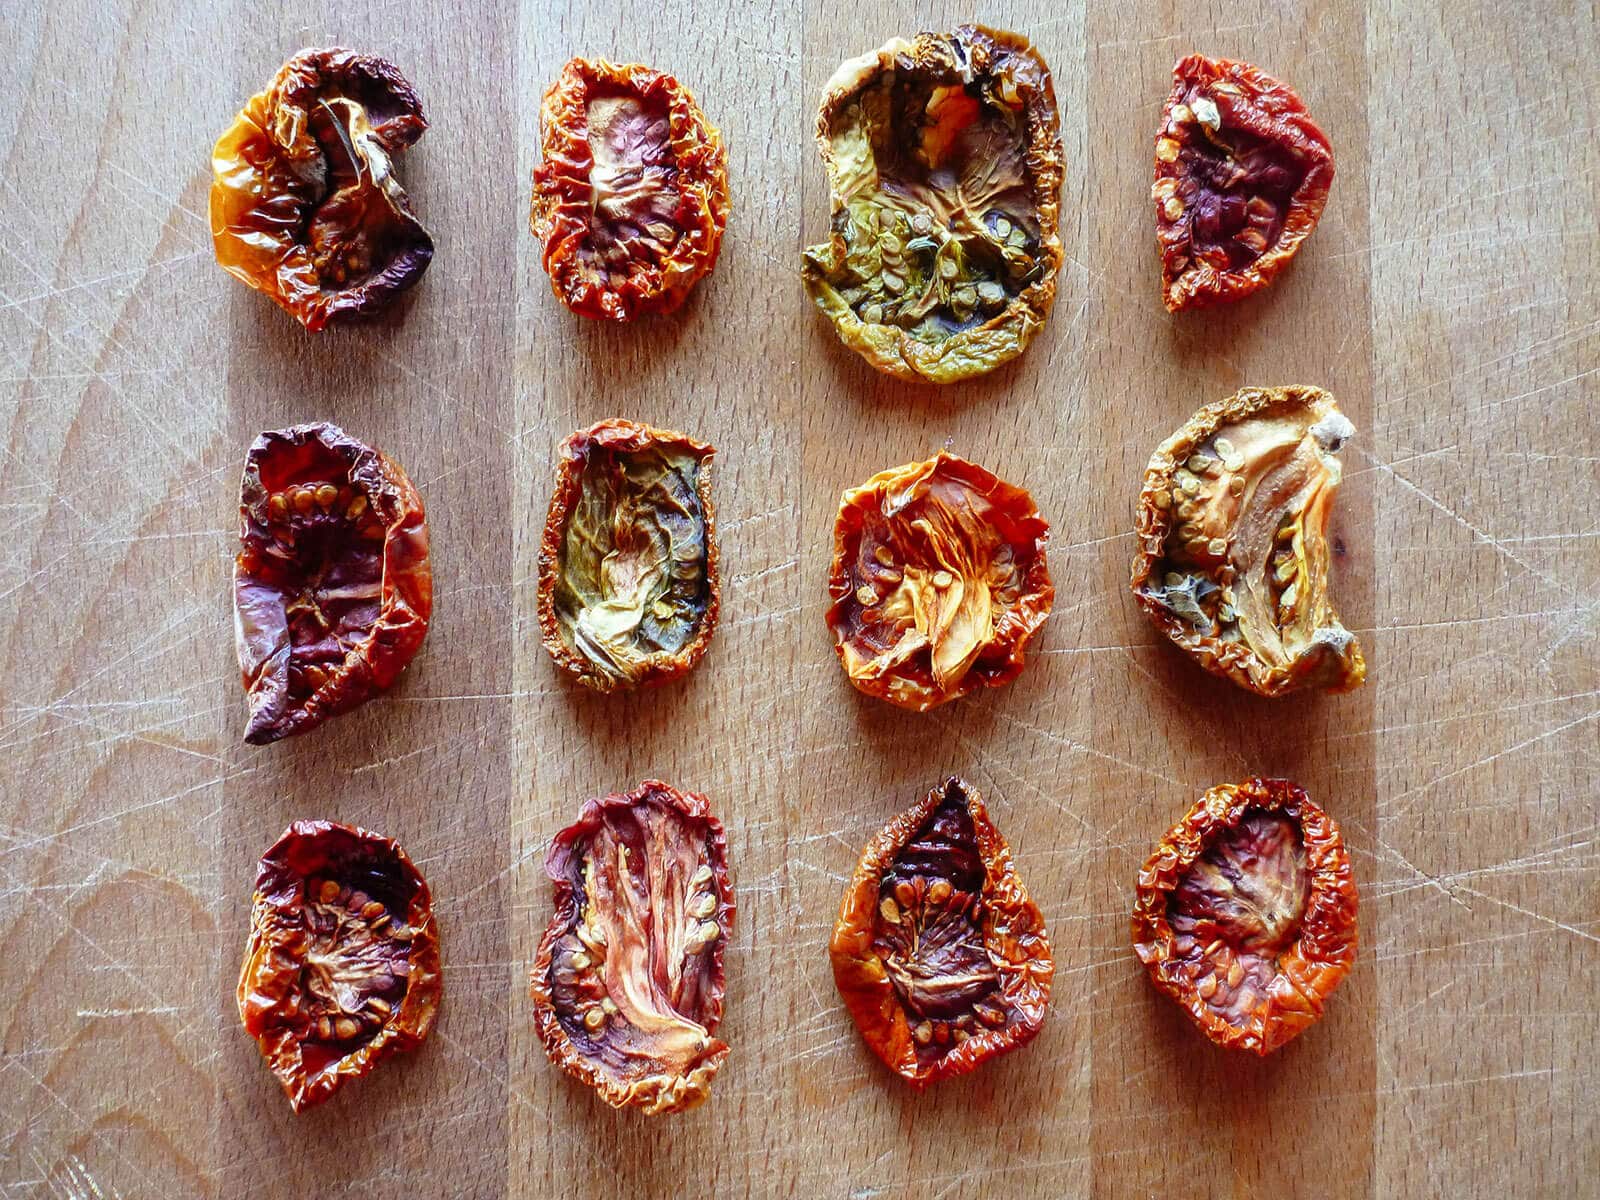 https://www.gardenbetty.com/wp-content/uploads/2020/08/sun-dried-tomatoes-in-oven-01.jpg